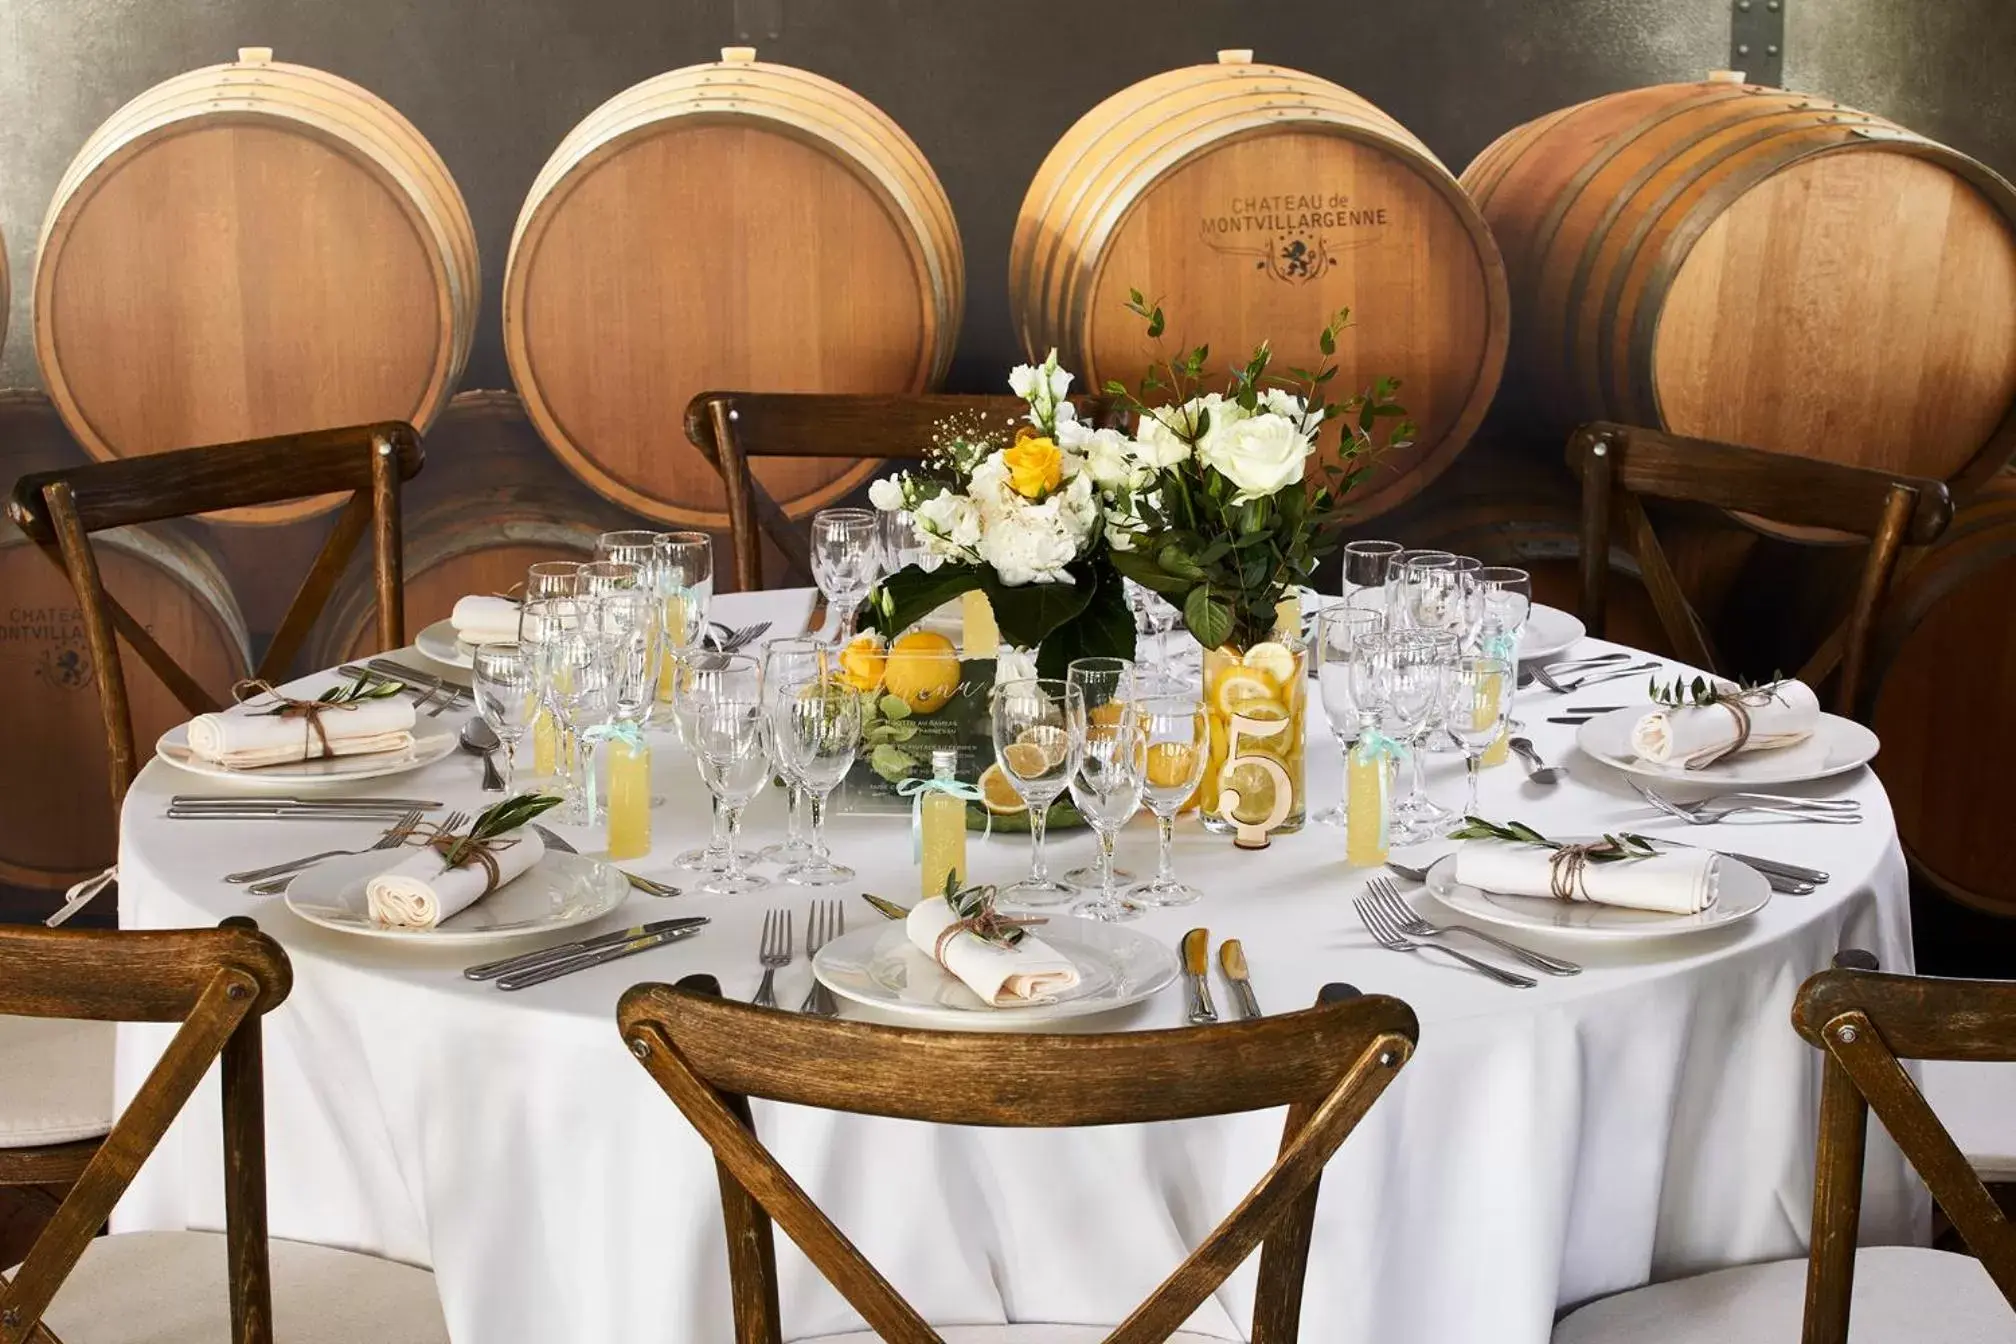 wedding, Restaurant/Places to Eat in Chateau de Montvillargenne